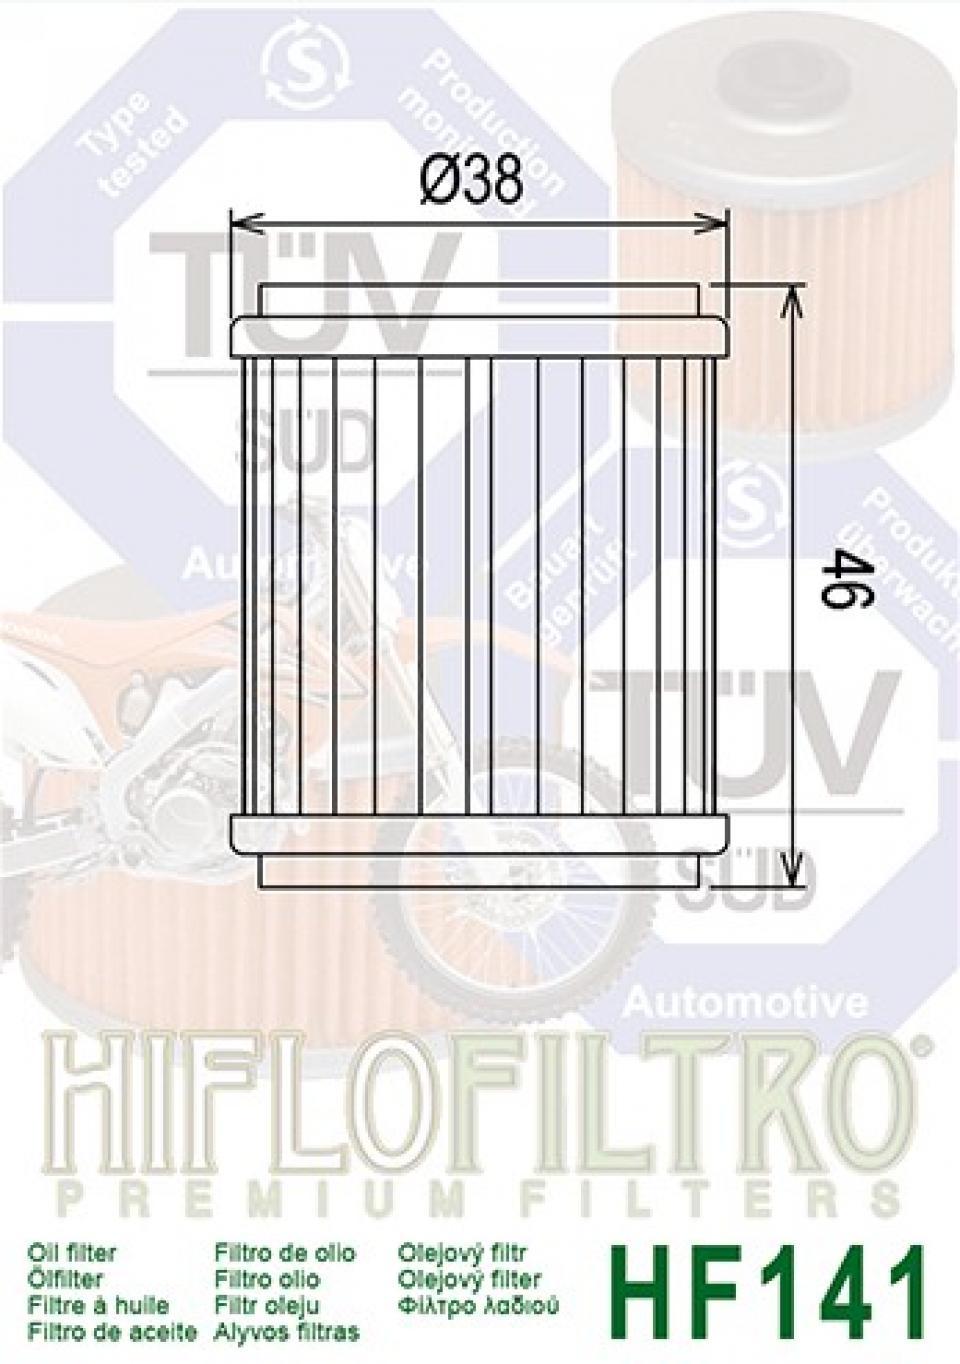 Filtre à huile Hiflofiltro pour Moto Rieju 125 RS3 Sport 2009 à 2011 Neuf